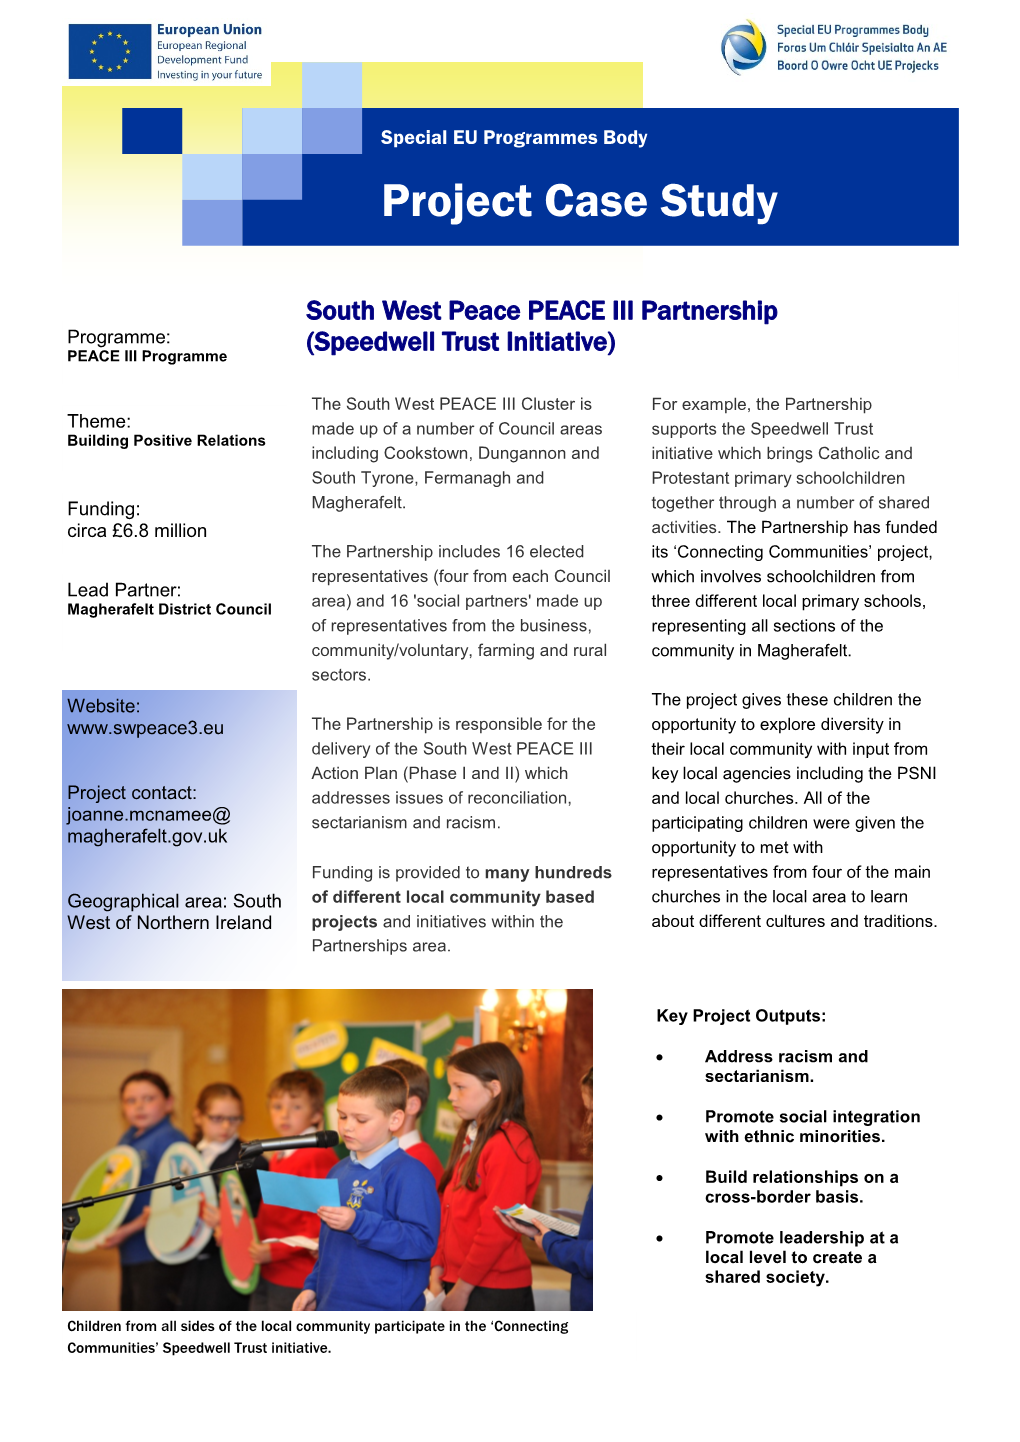 Southwest PEACE III Partnership